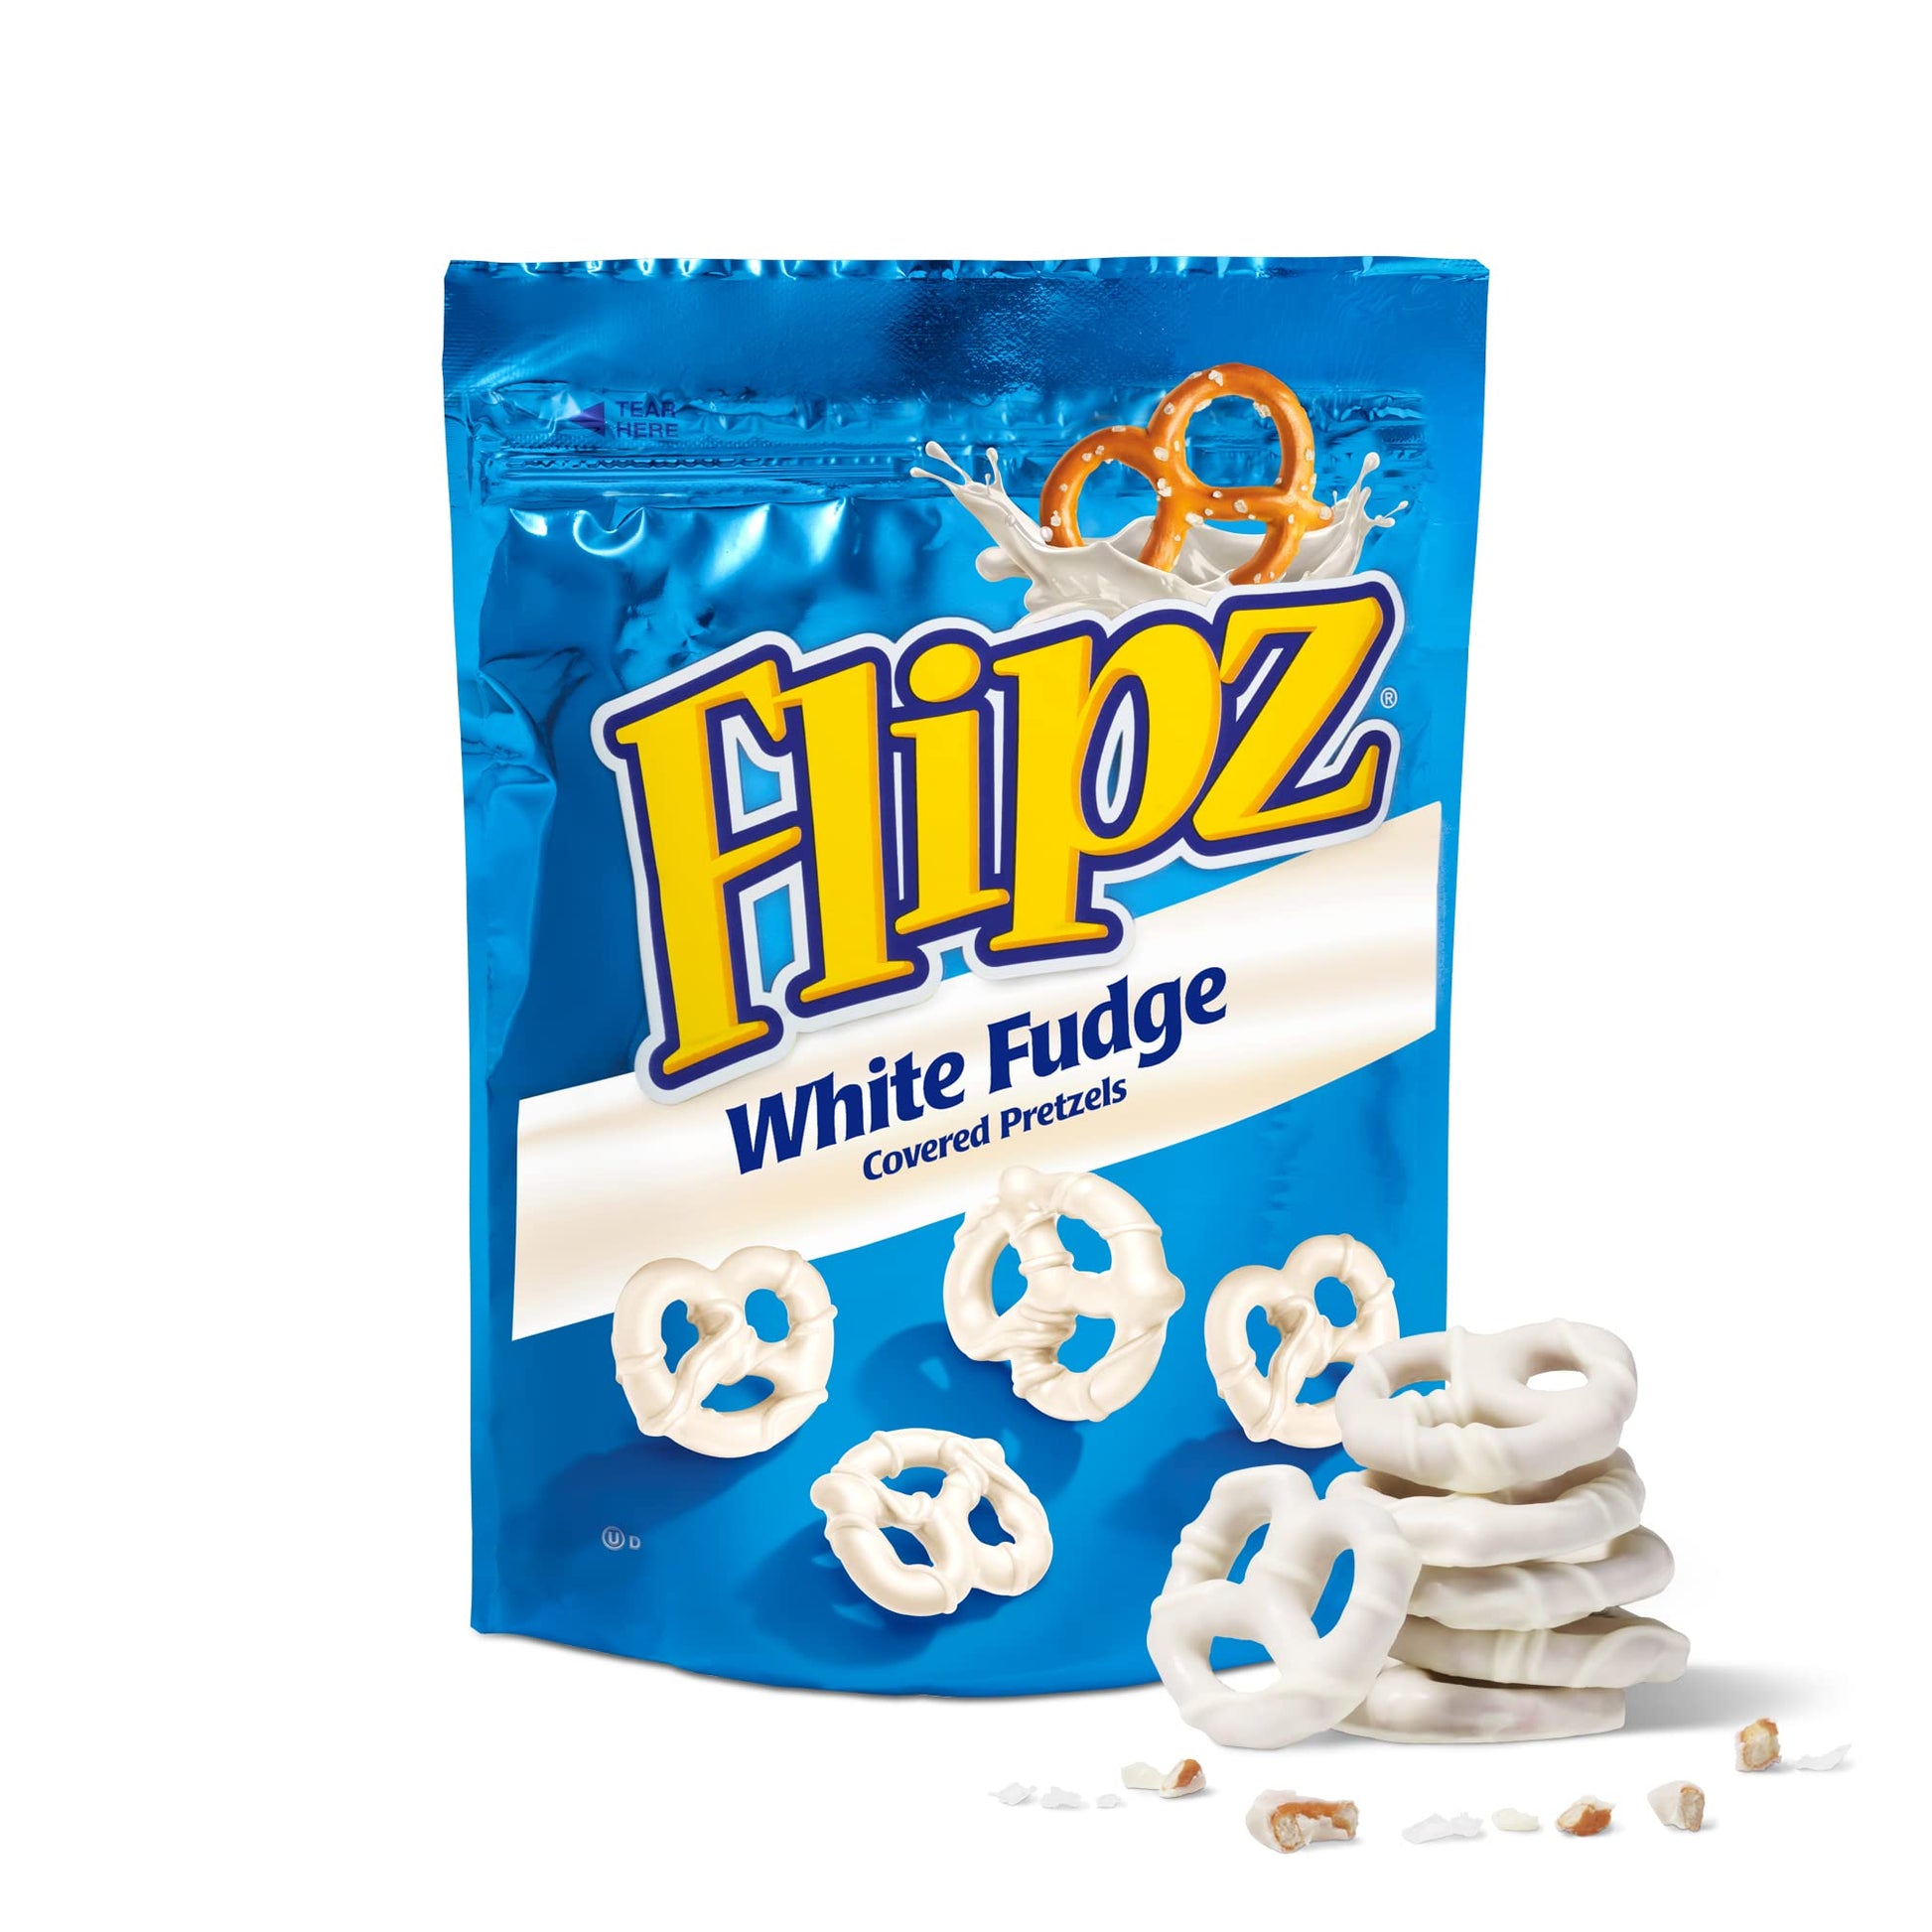 Flipz White Fudge 5oz 6 Count